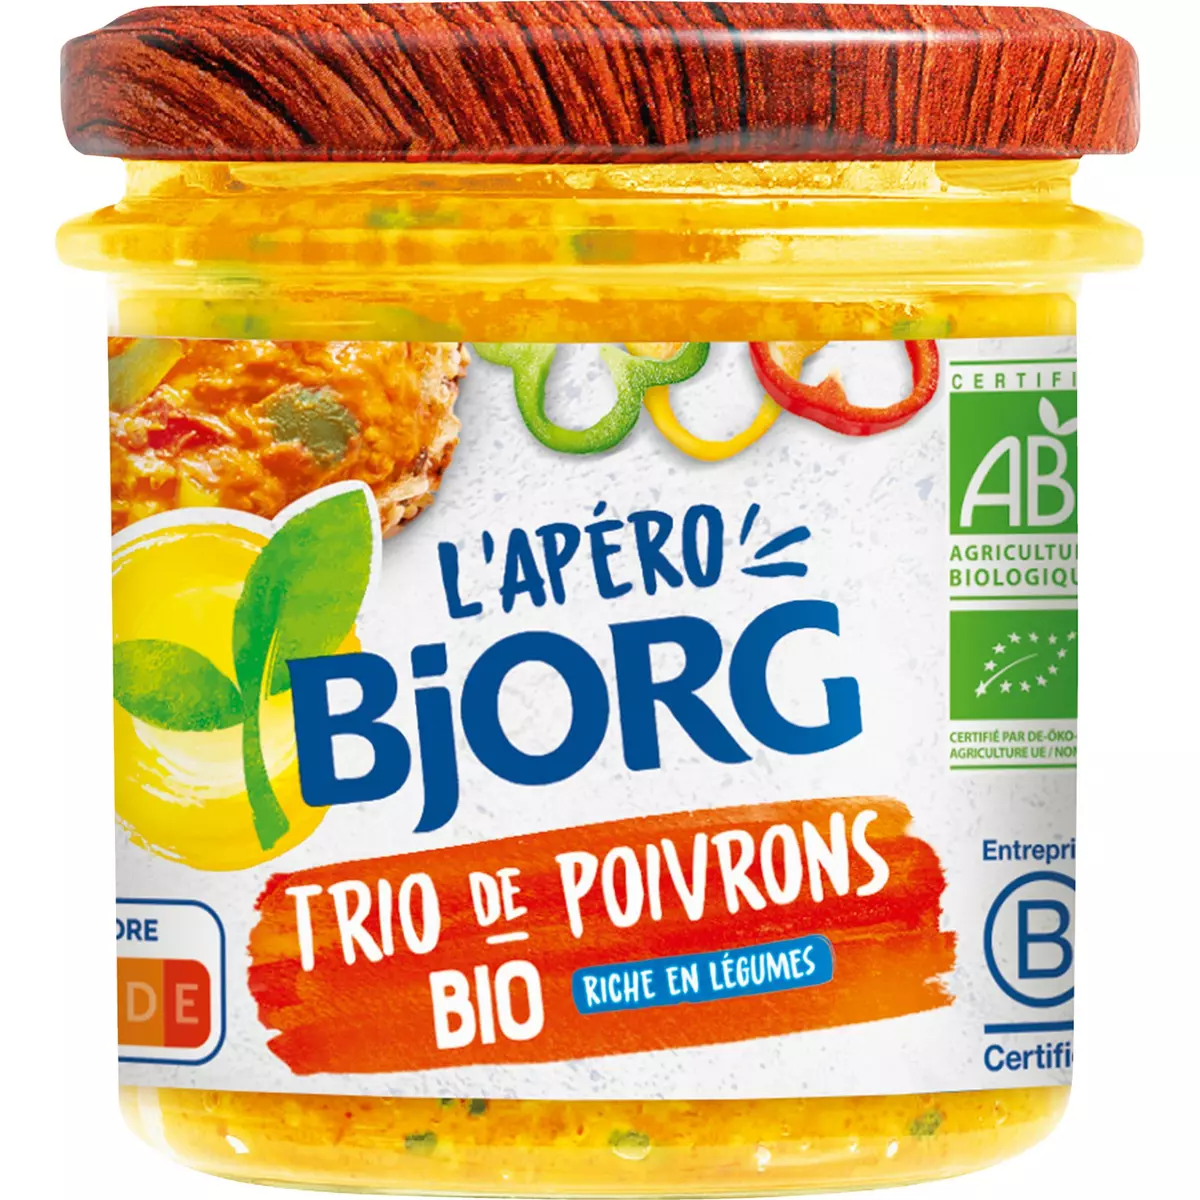 BJORG Tartine et cuisine trio de poivrons bio végétale 135g